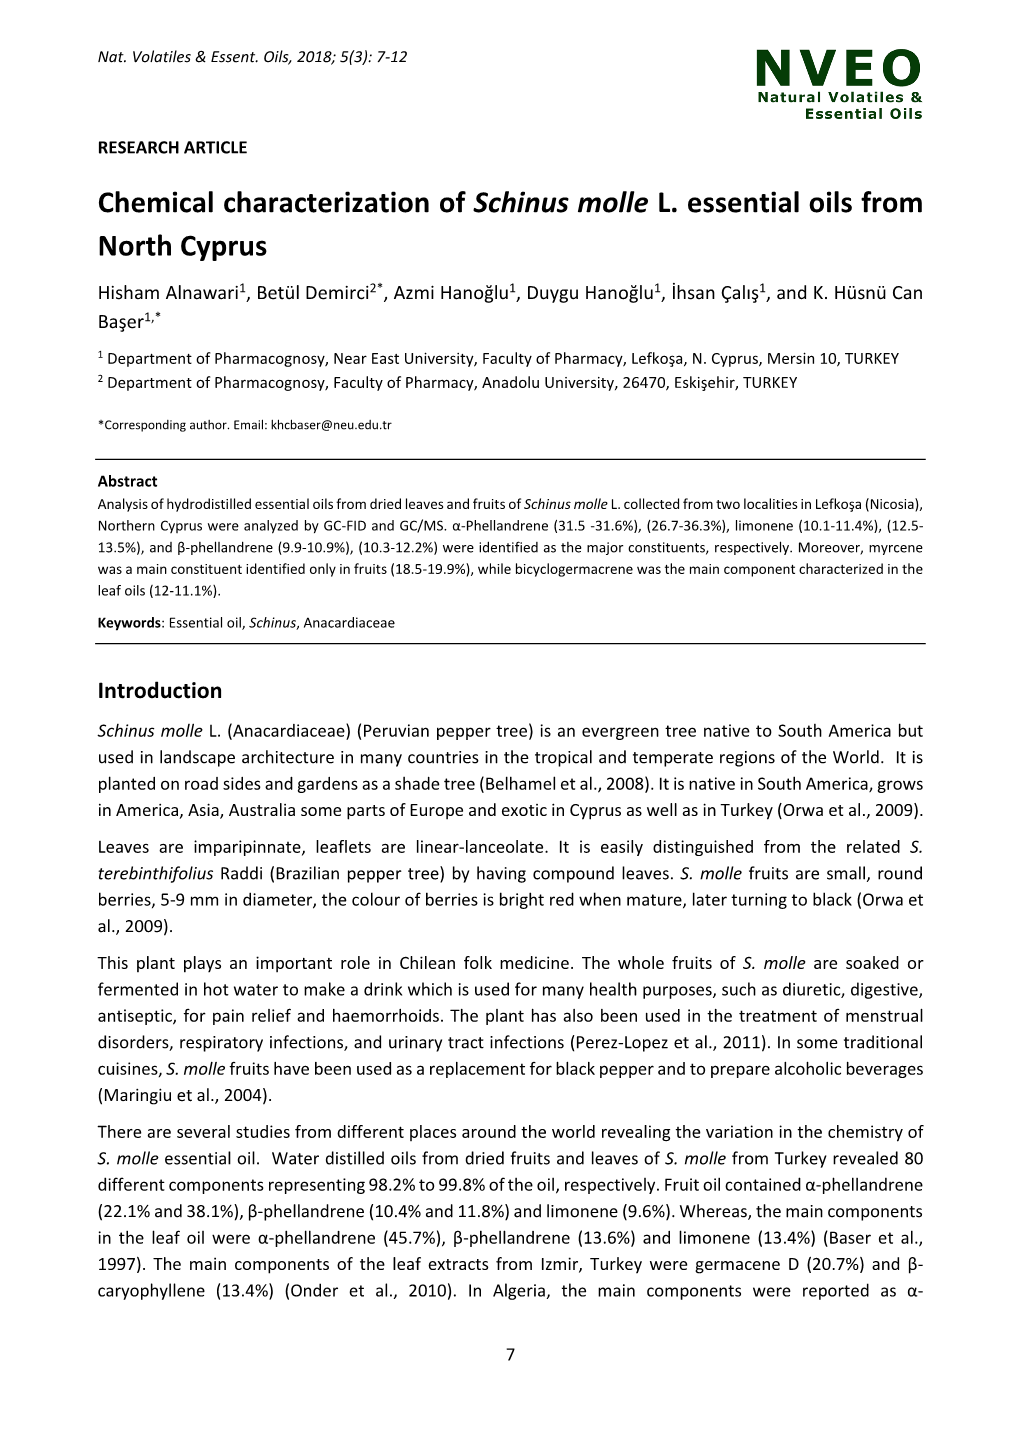 Chemical Characterization of Schinus Molle L. Essential Oils from North Cyprus Hisham Alnawari1, Betül Demirci2*, Azmi Hanoğlu1, Duygu Hanoğlu1, İhsan Çalış1, and K